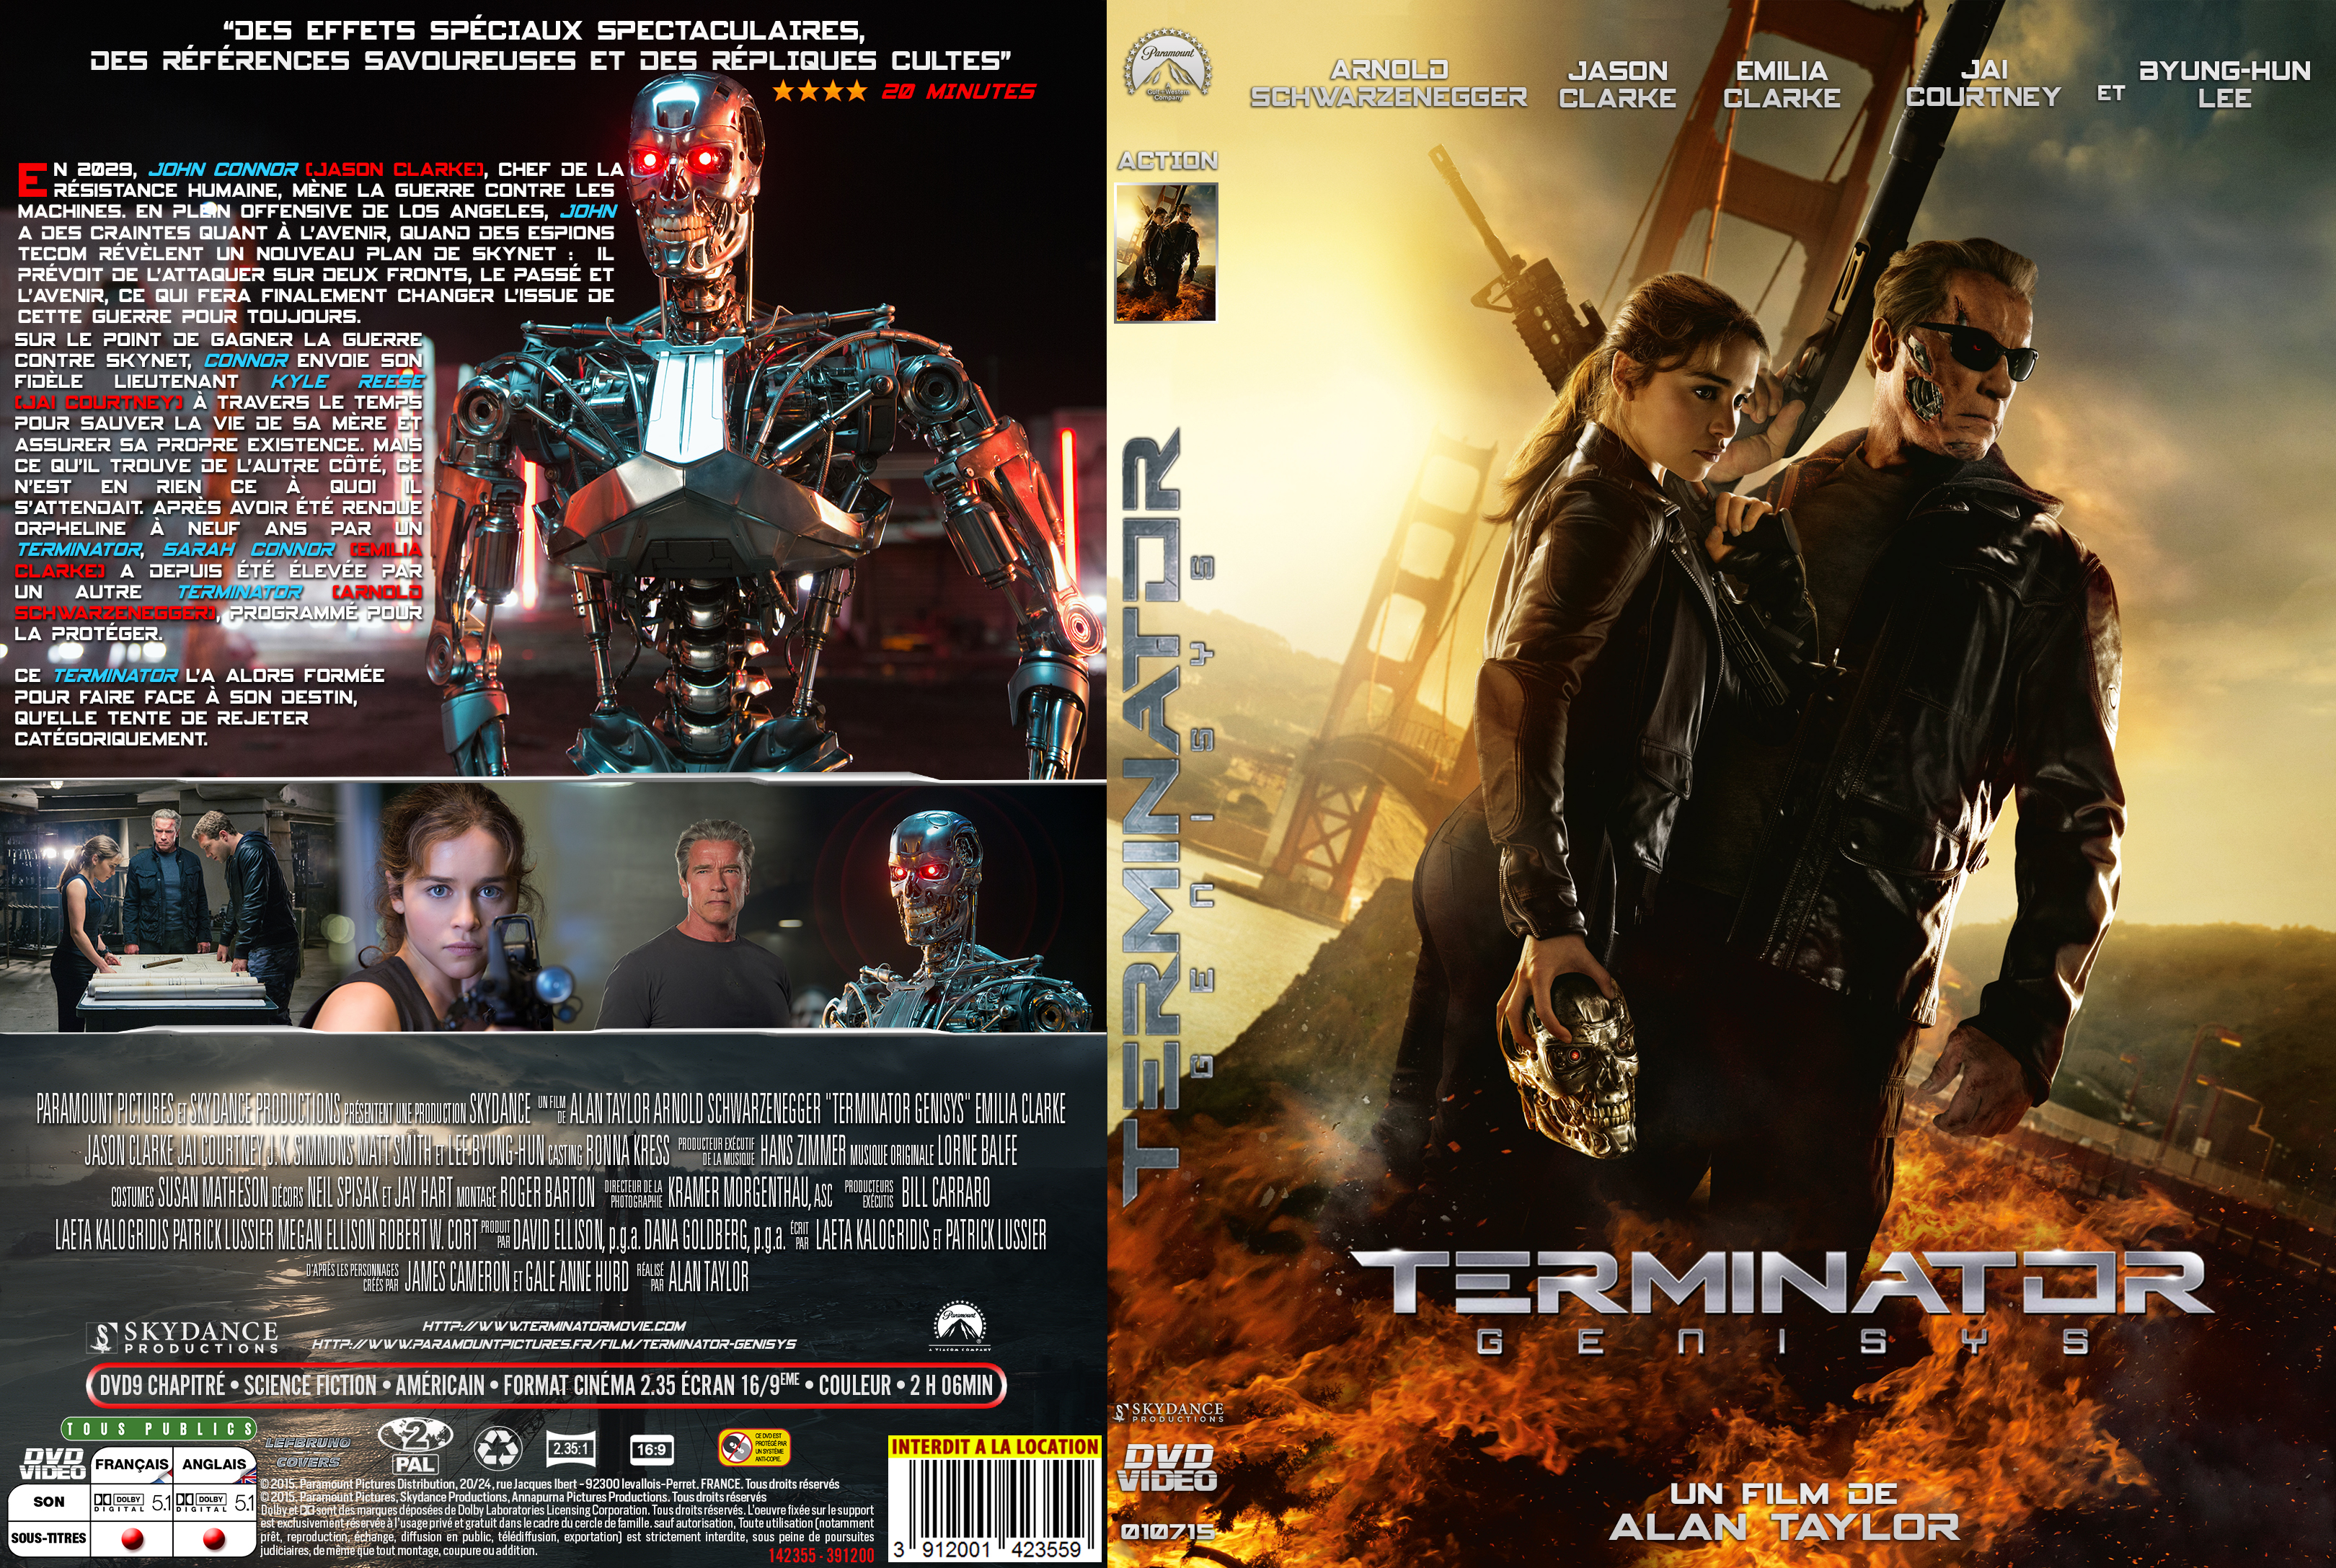 Jaquette DVD Terminator Genisys custom v2